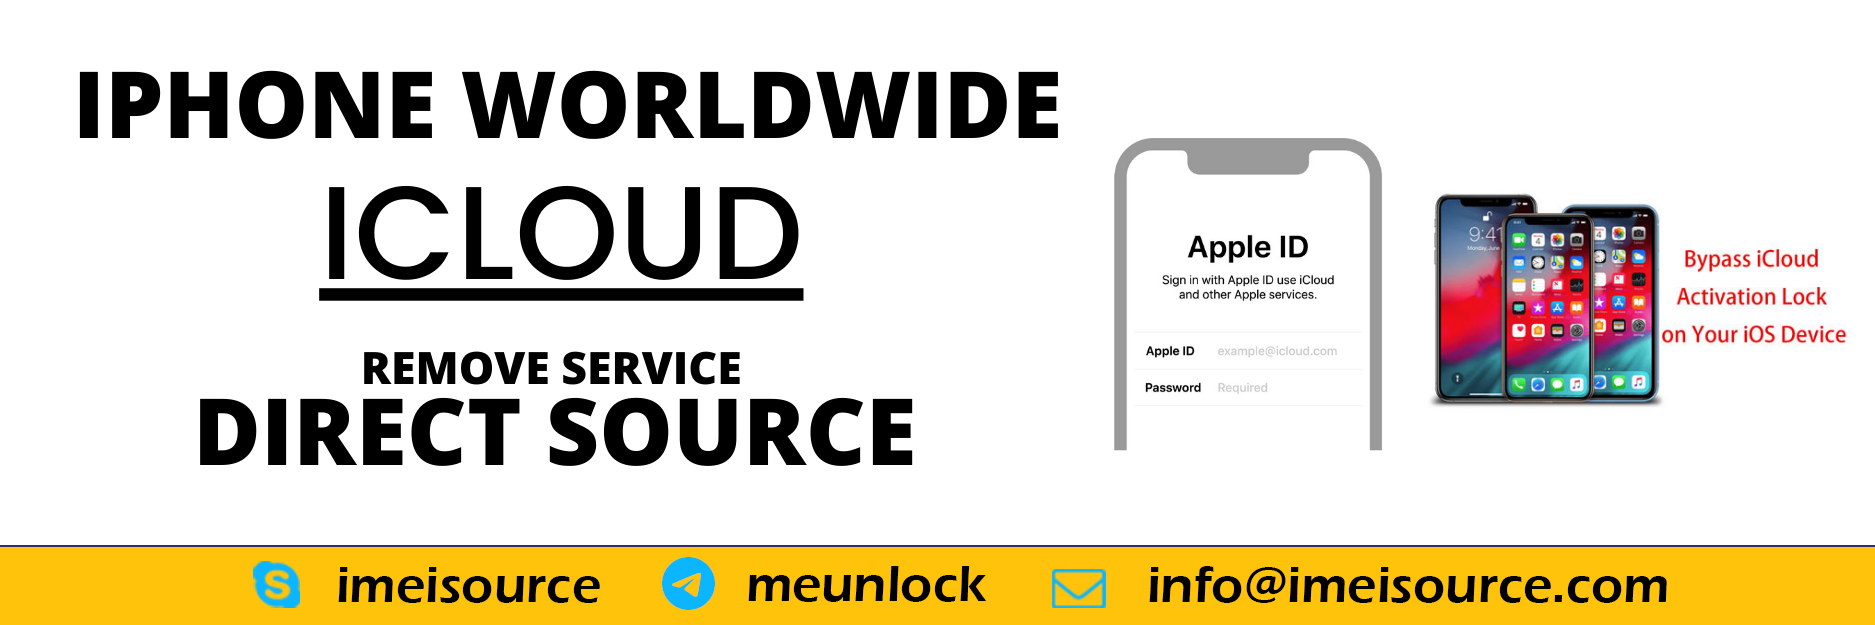 iCloud Remove Worldwide Service